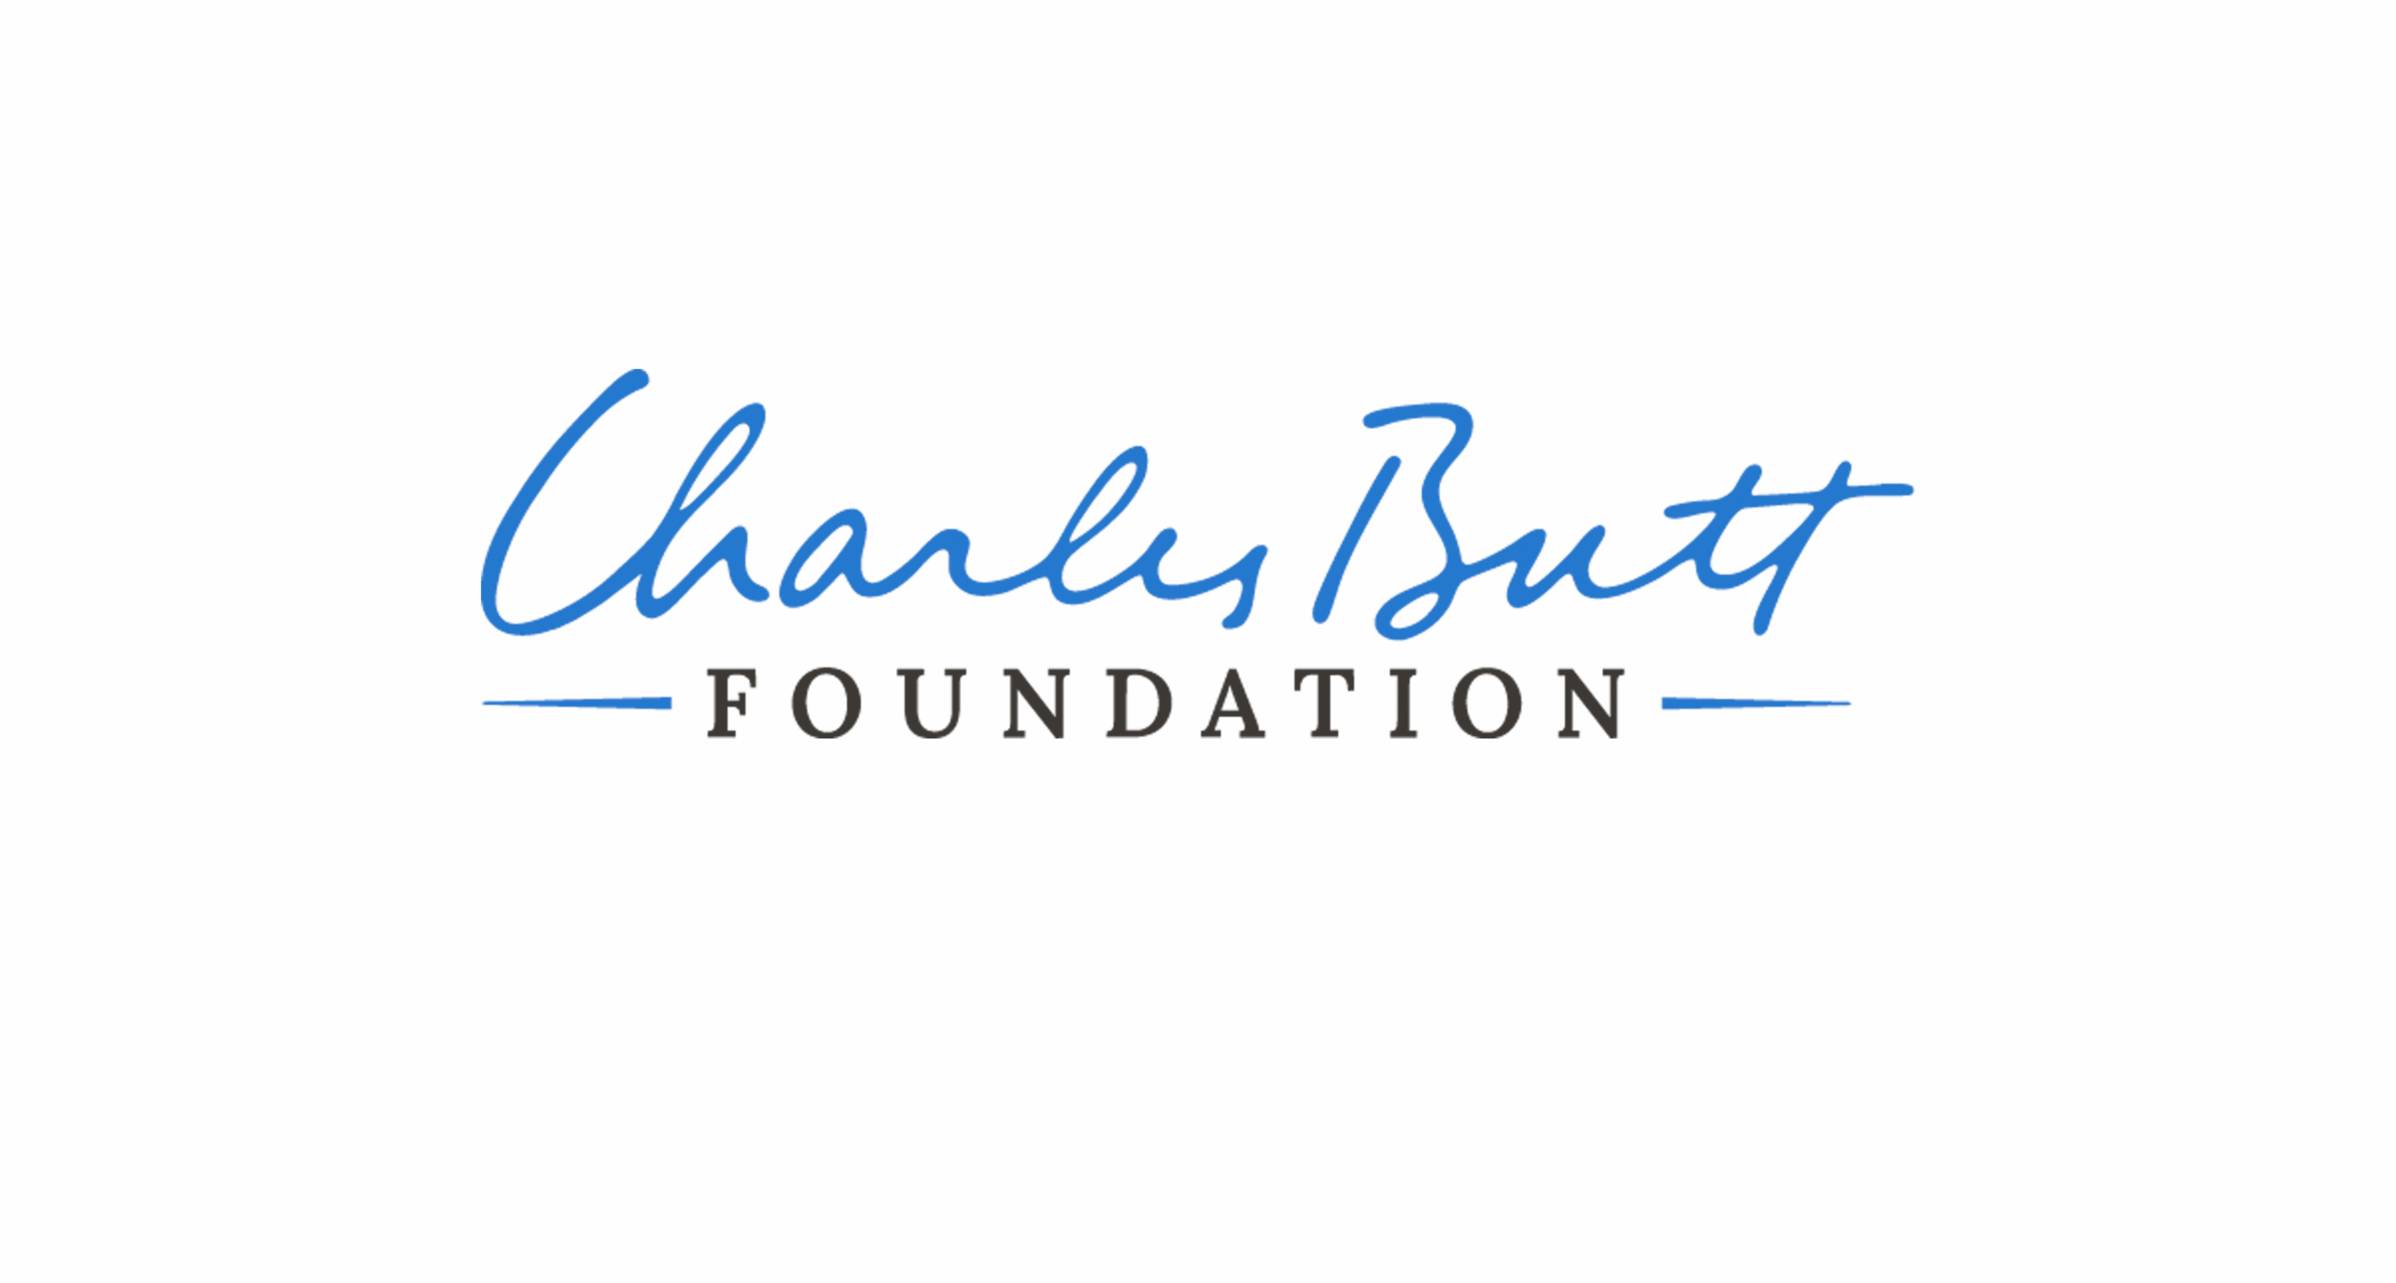 Charles Butt Foundation Logo